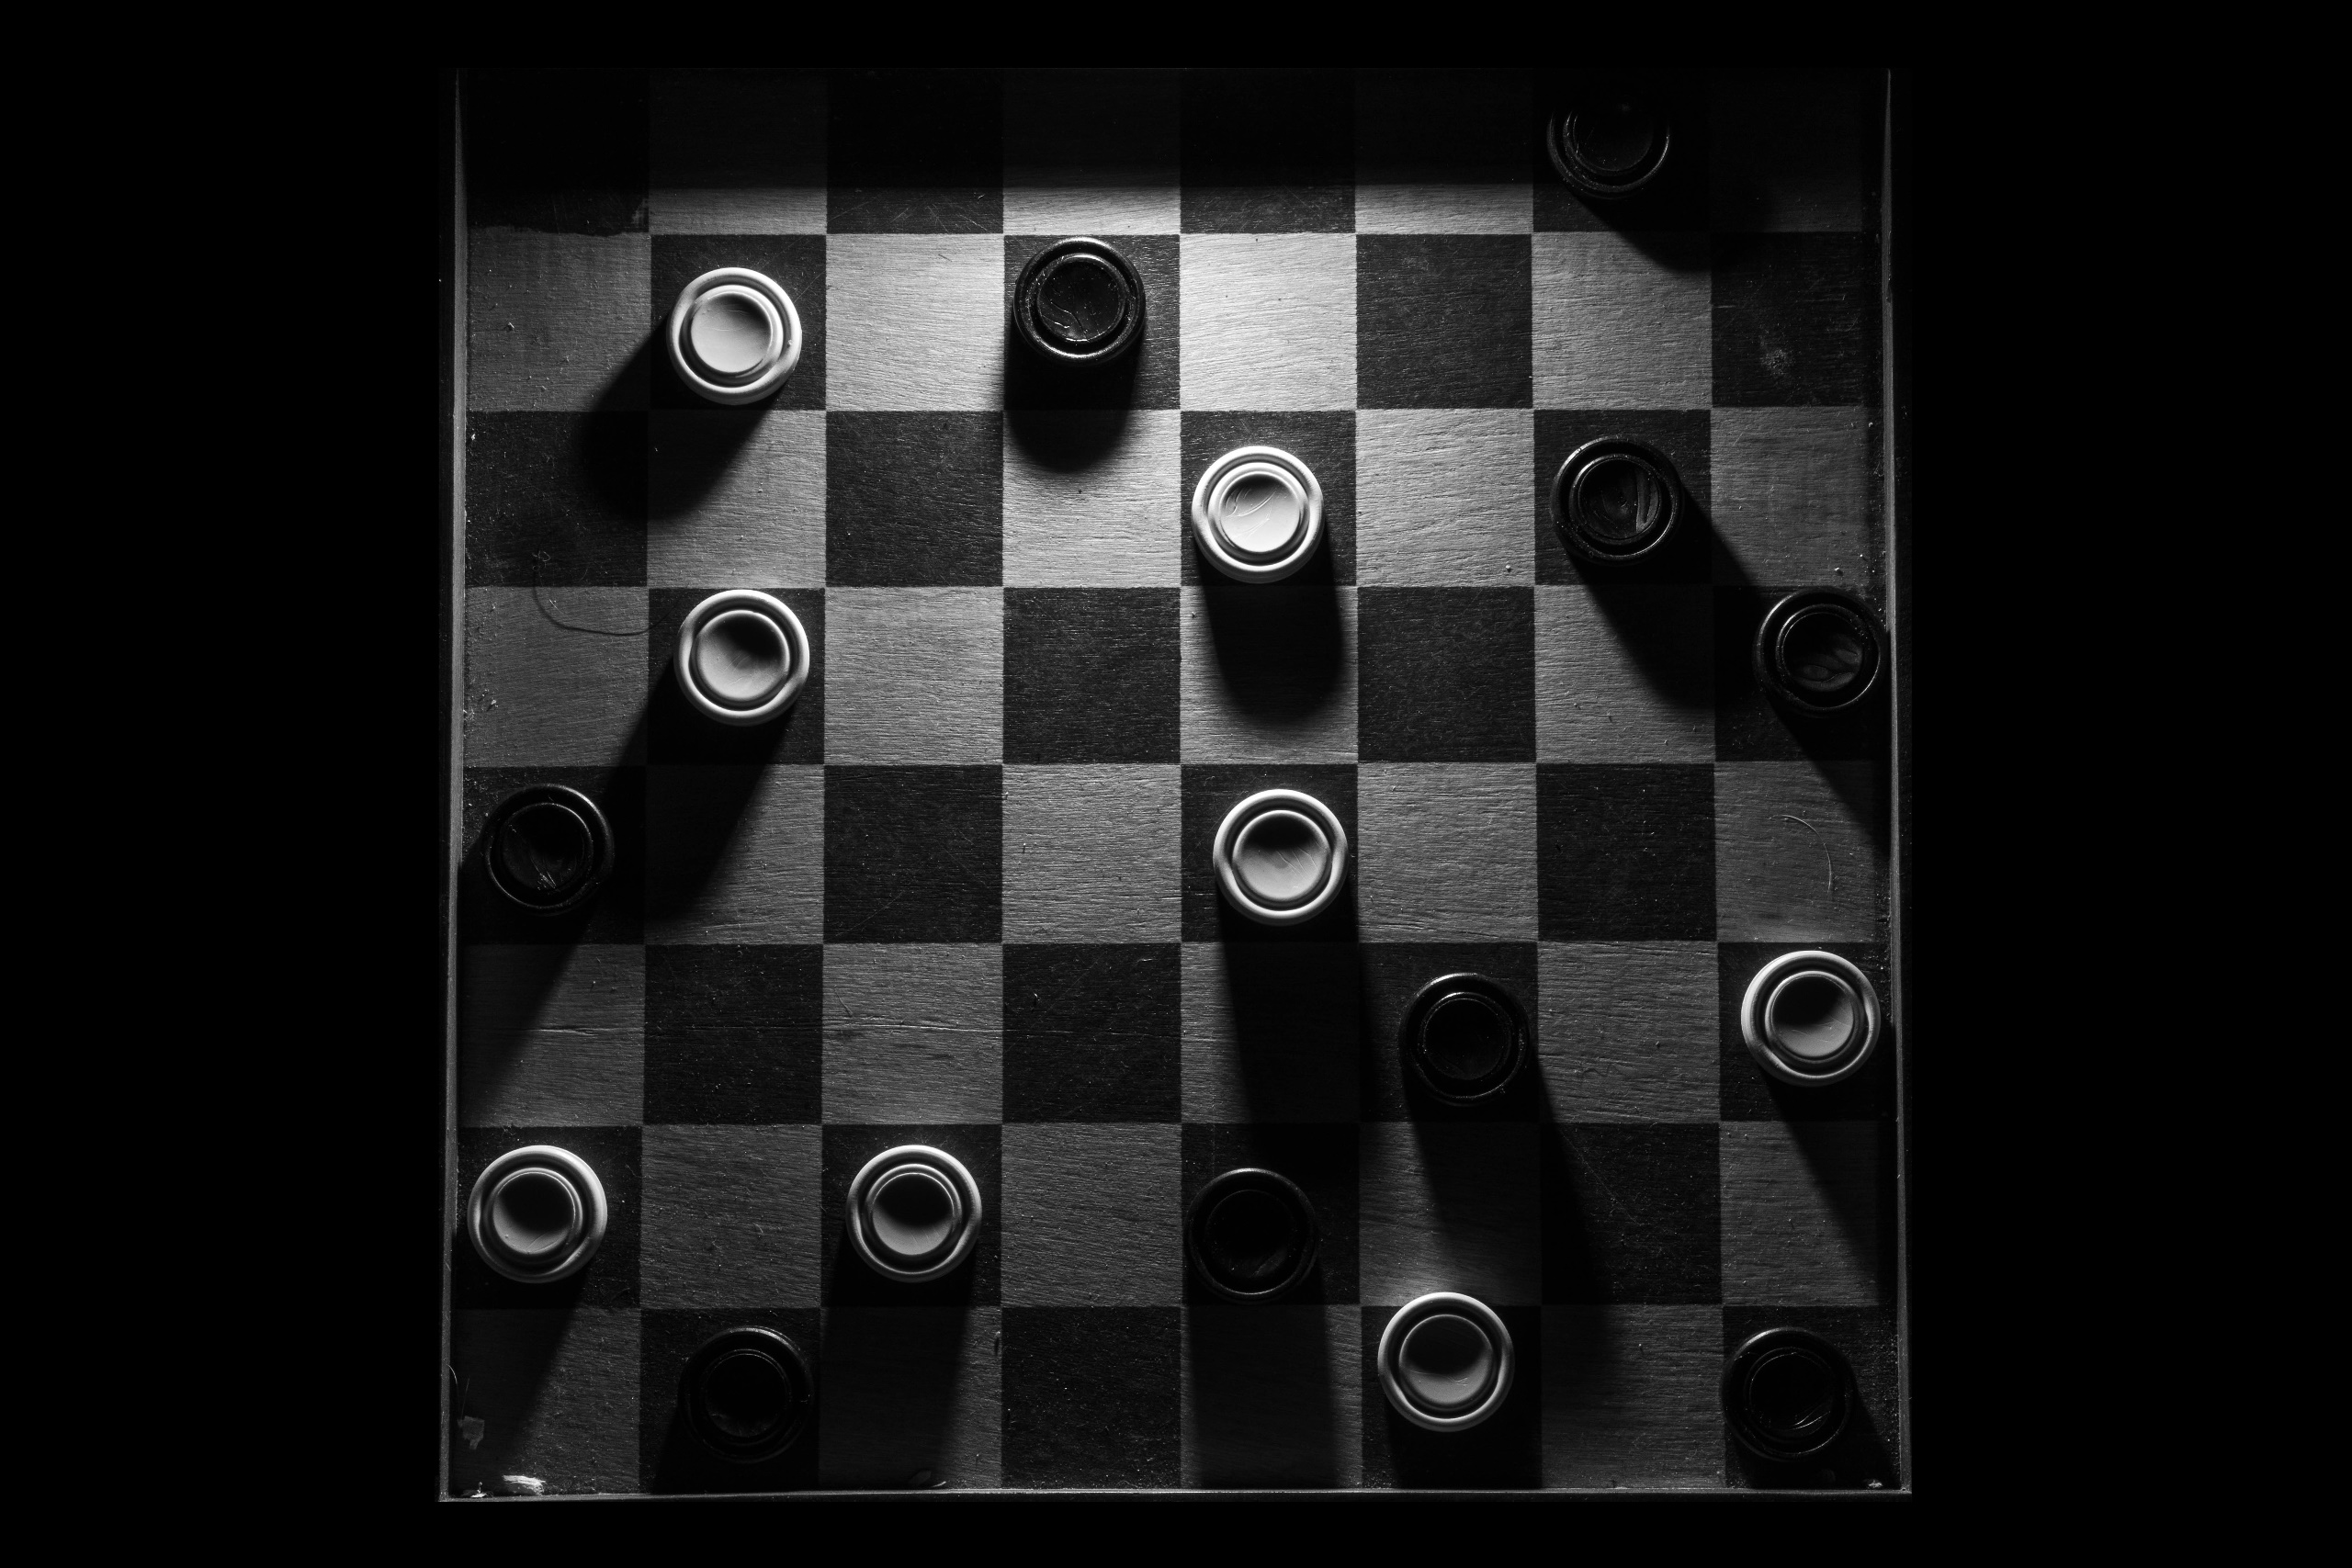 General 2560x1707 board games dark monochrome black chessboard top view black background